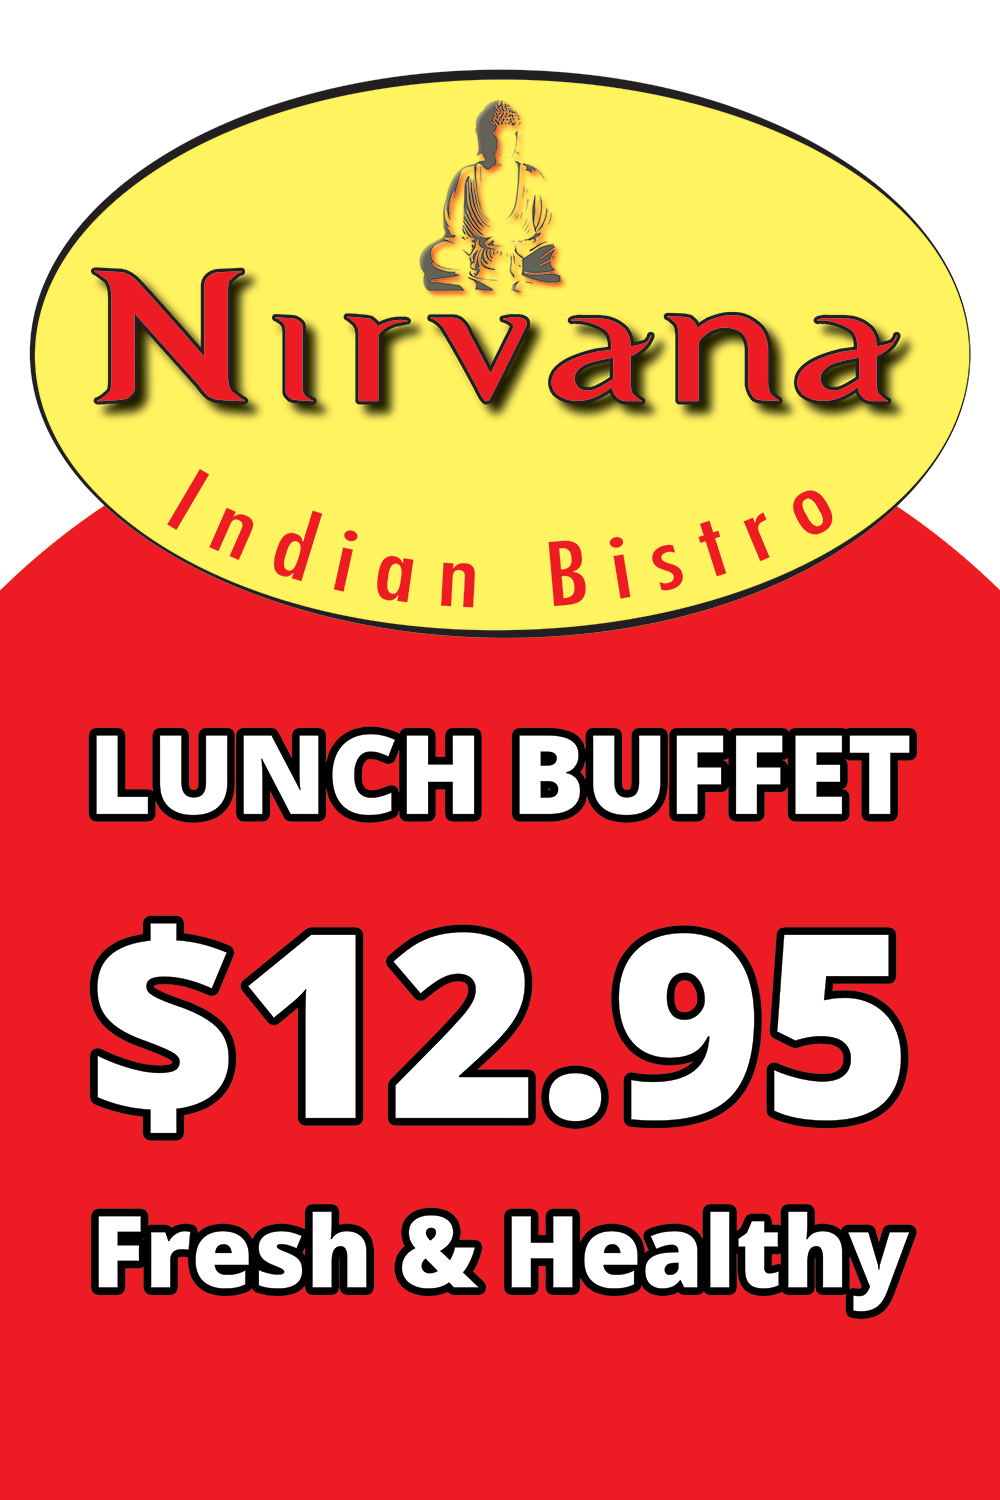 nirvana-bistro-logo-nabin-24x36-fresh-and-healthy1295-flat.jpg